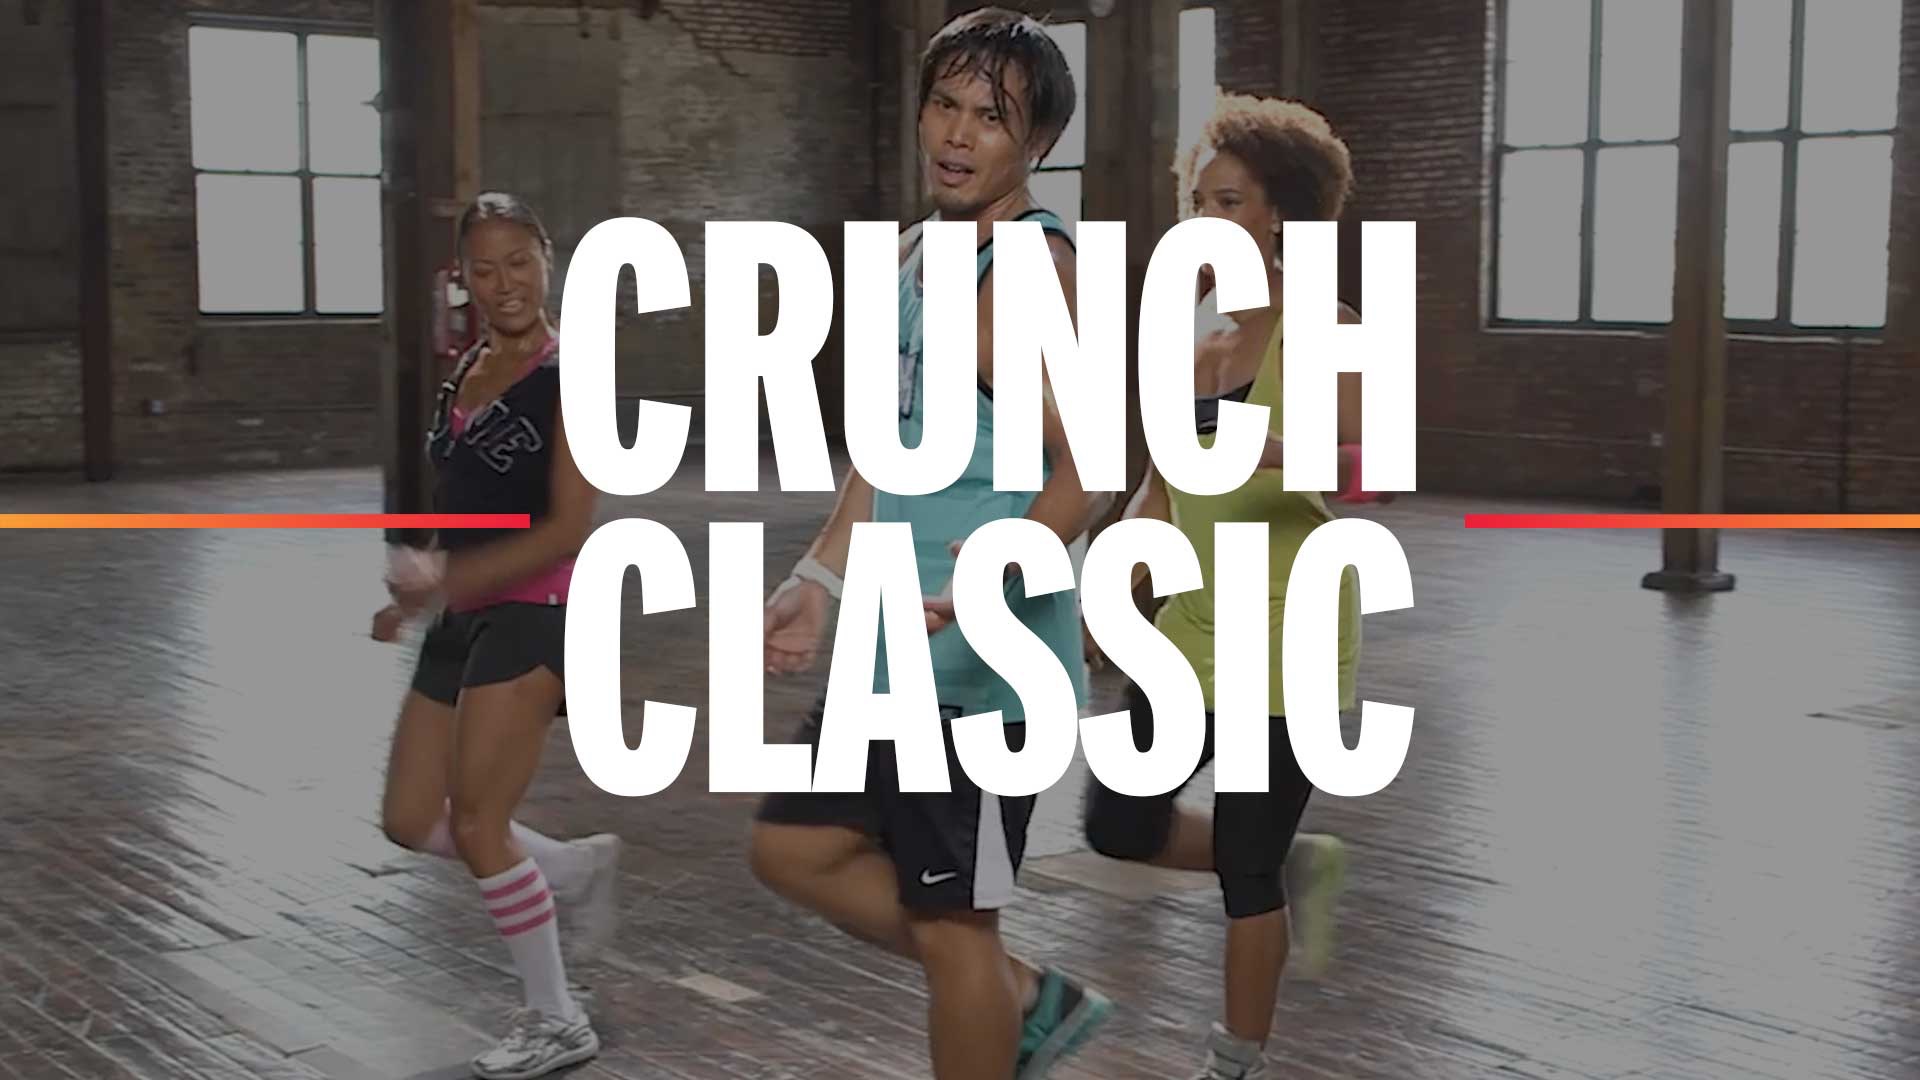 Crunch Classic by Crunch+